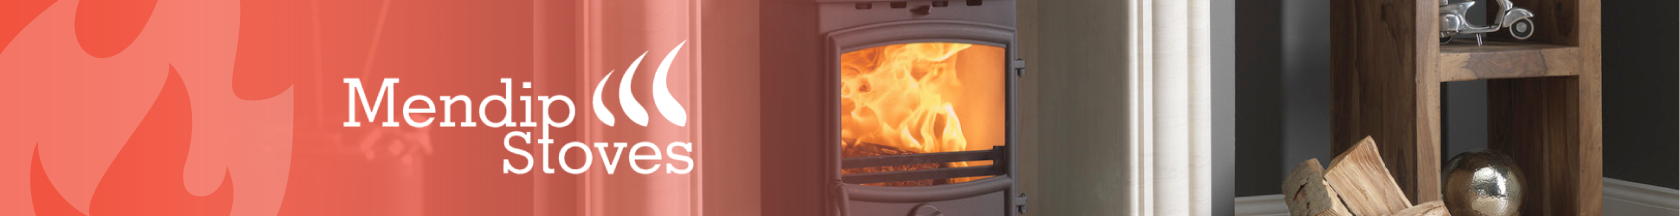 Mendip stoves Chorlton-Cum-Hardy